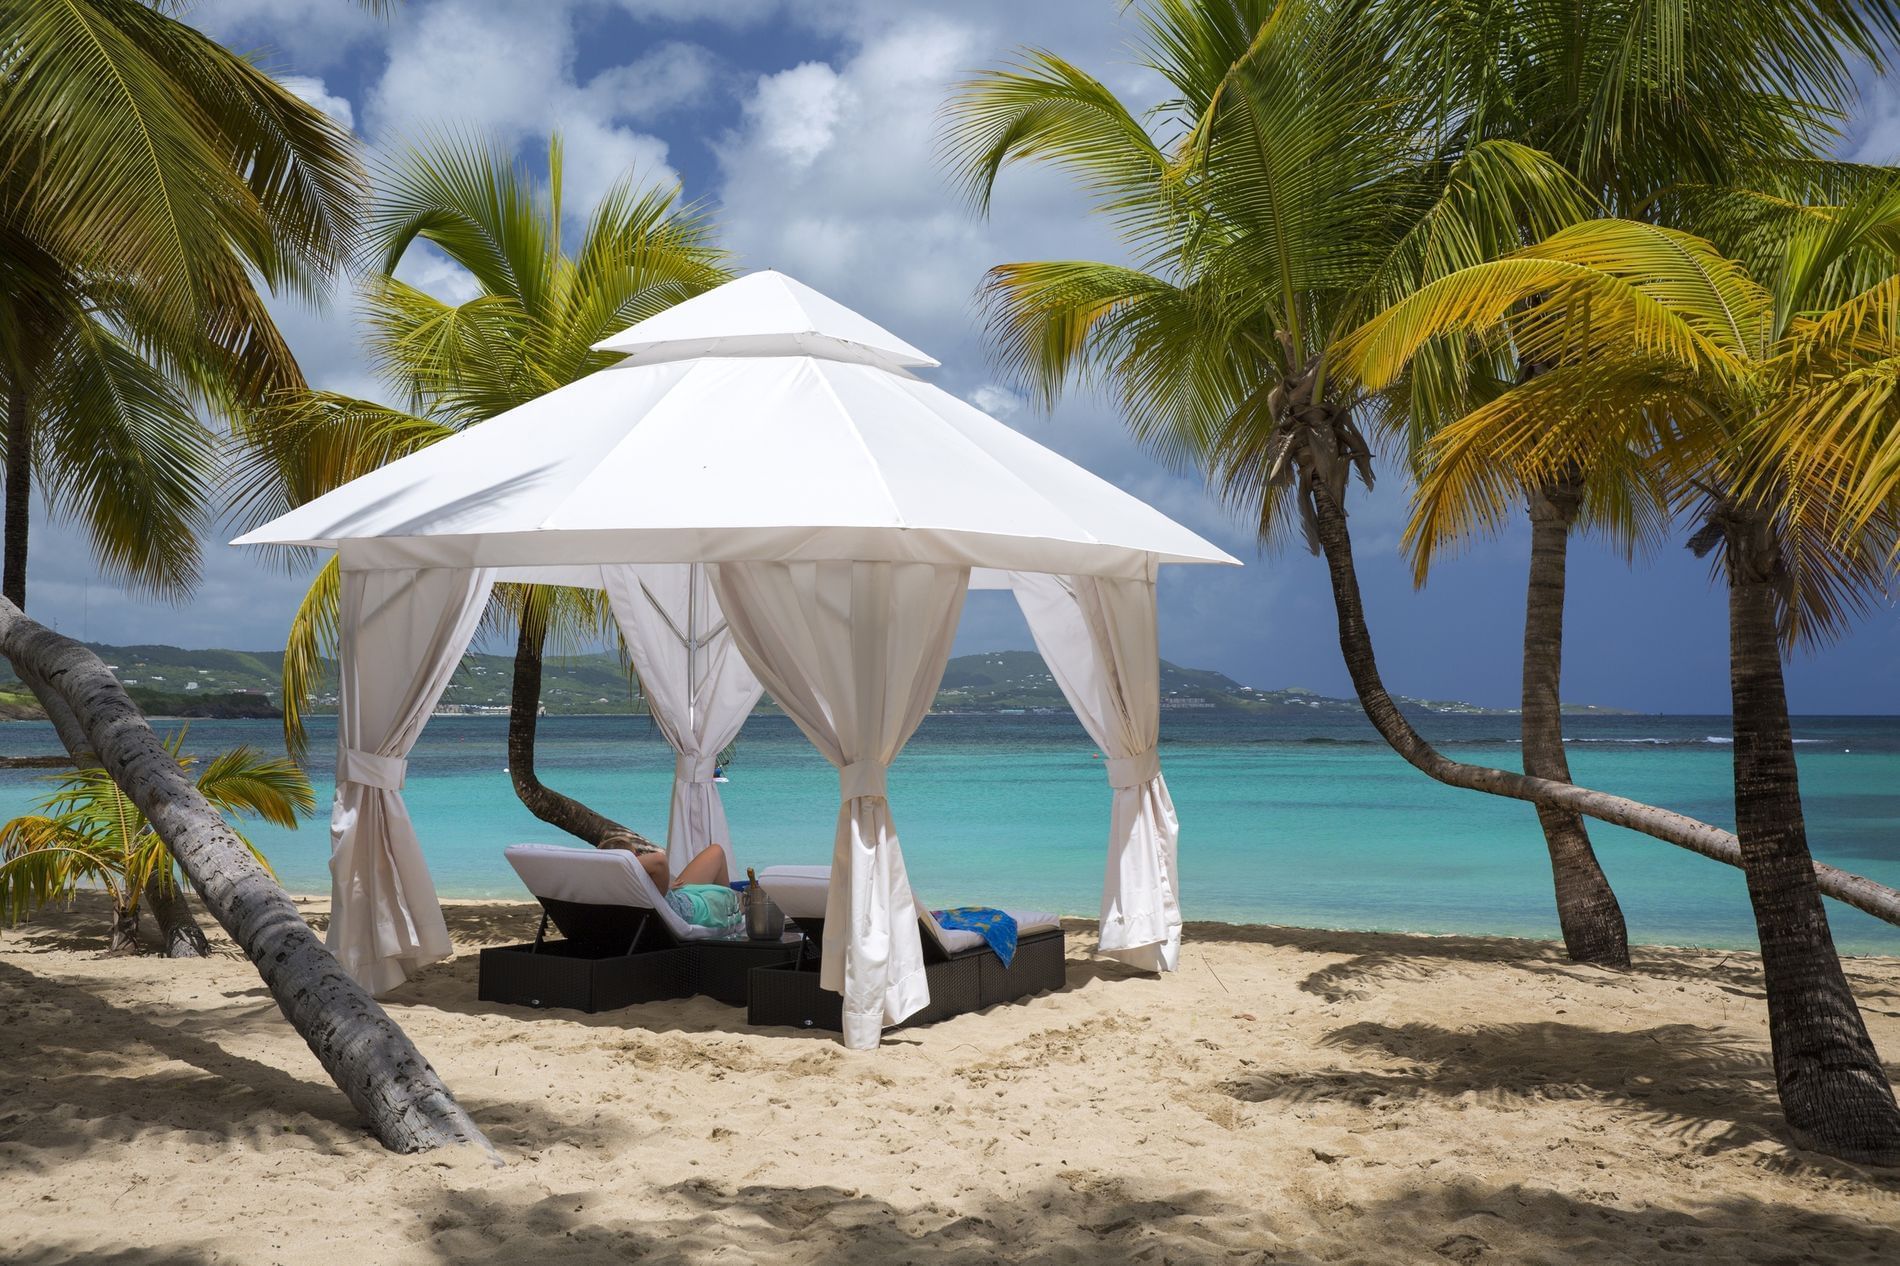 Private cabana in Mermaid Beach near The Buccaneer Resort St. Croix